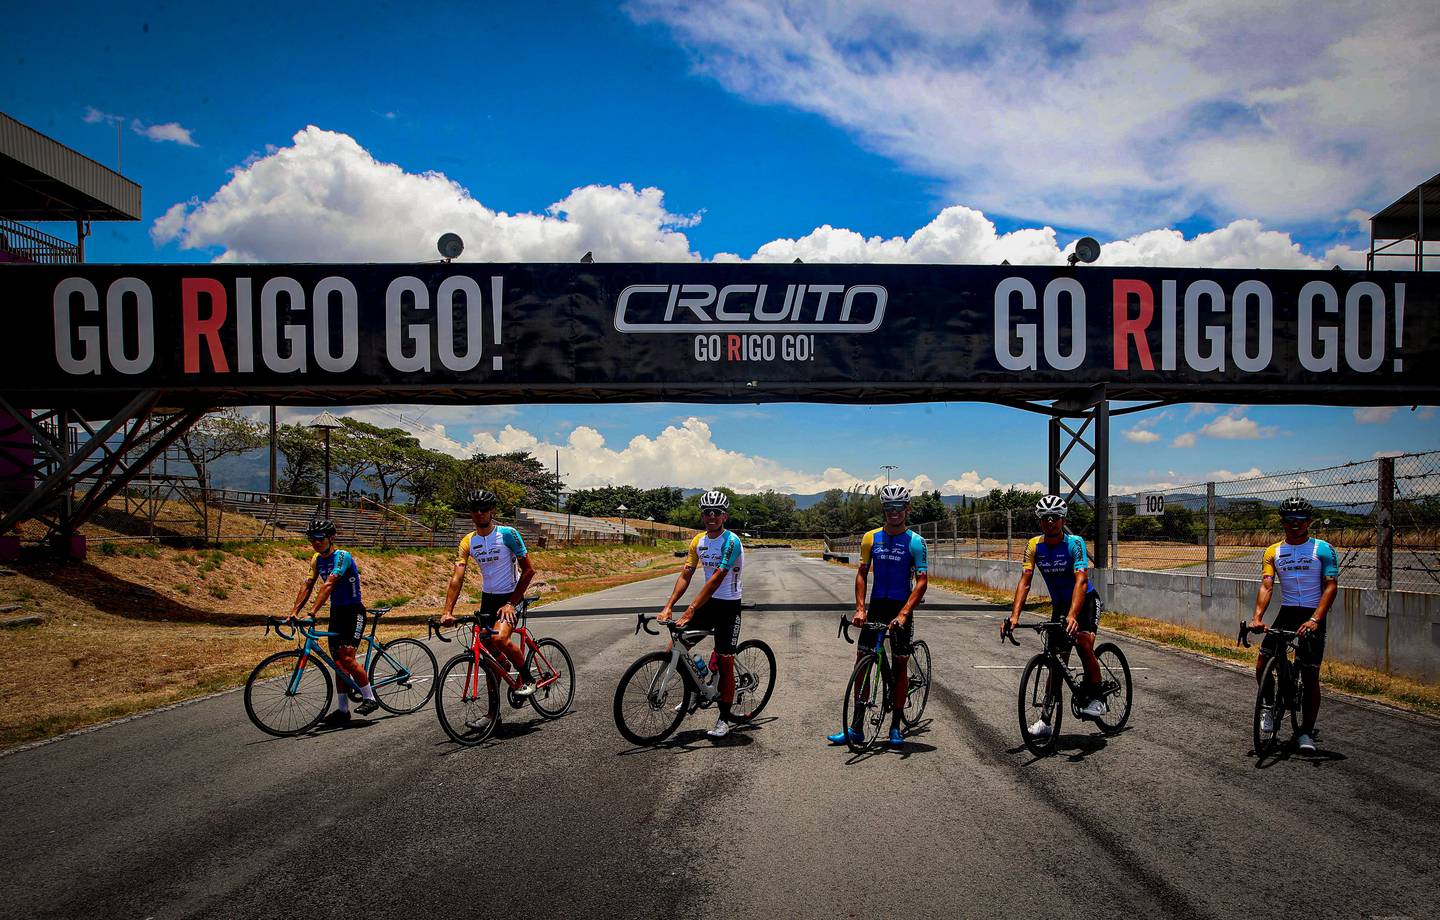 Ropa de Ciclismo Go Rigo Go! By Rigoberto Urán – GO RIGO GO!